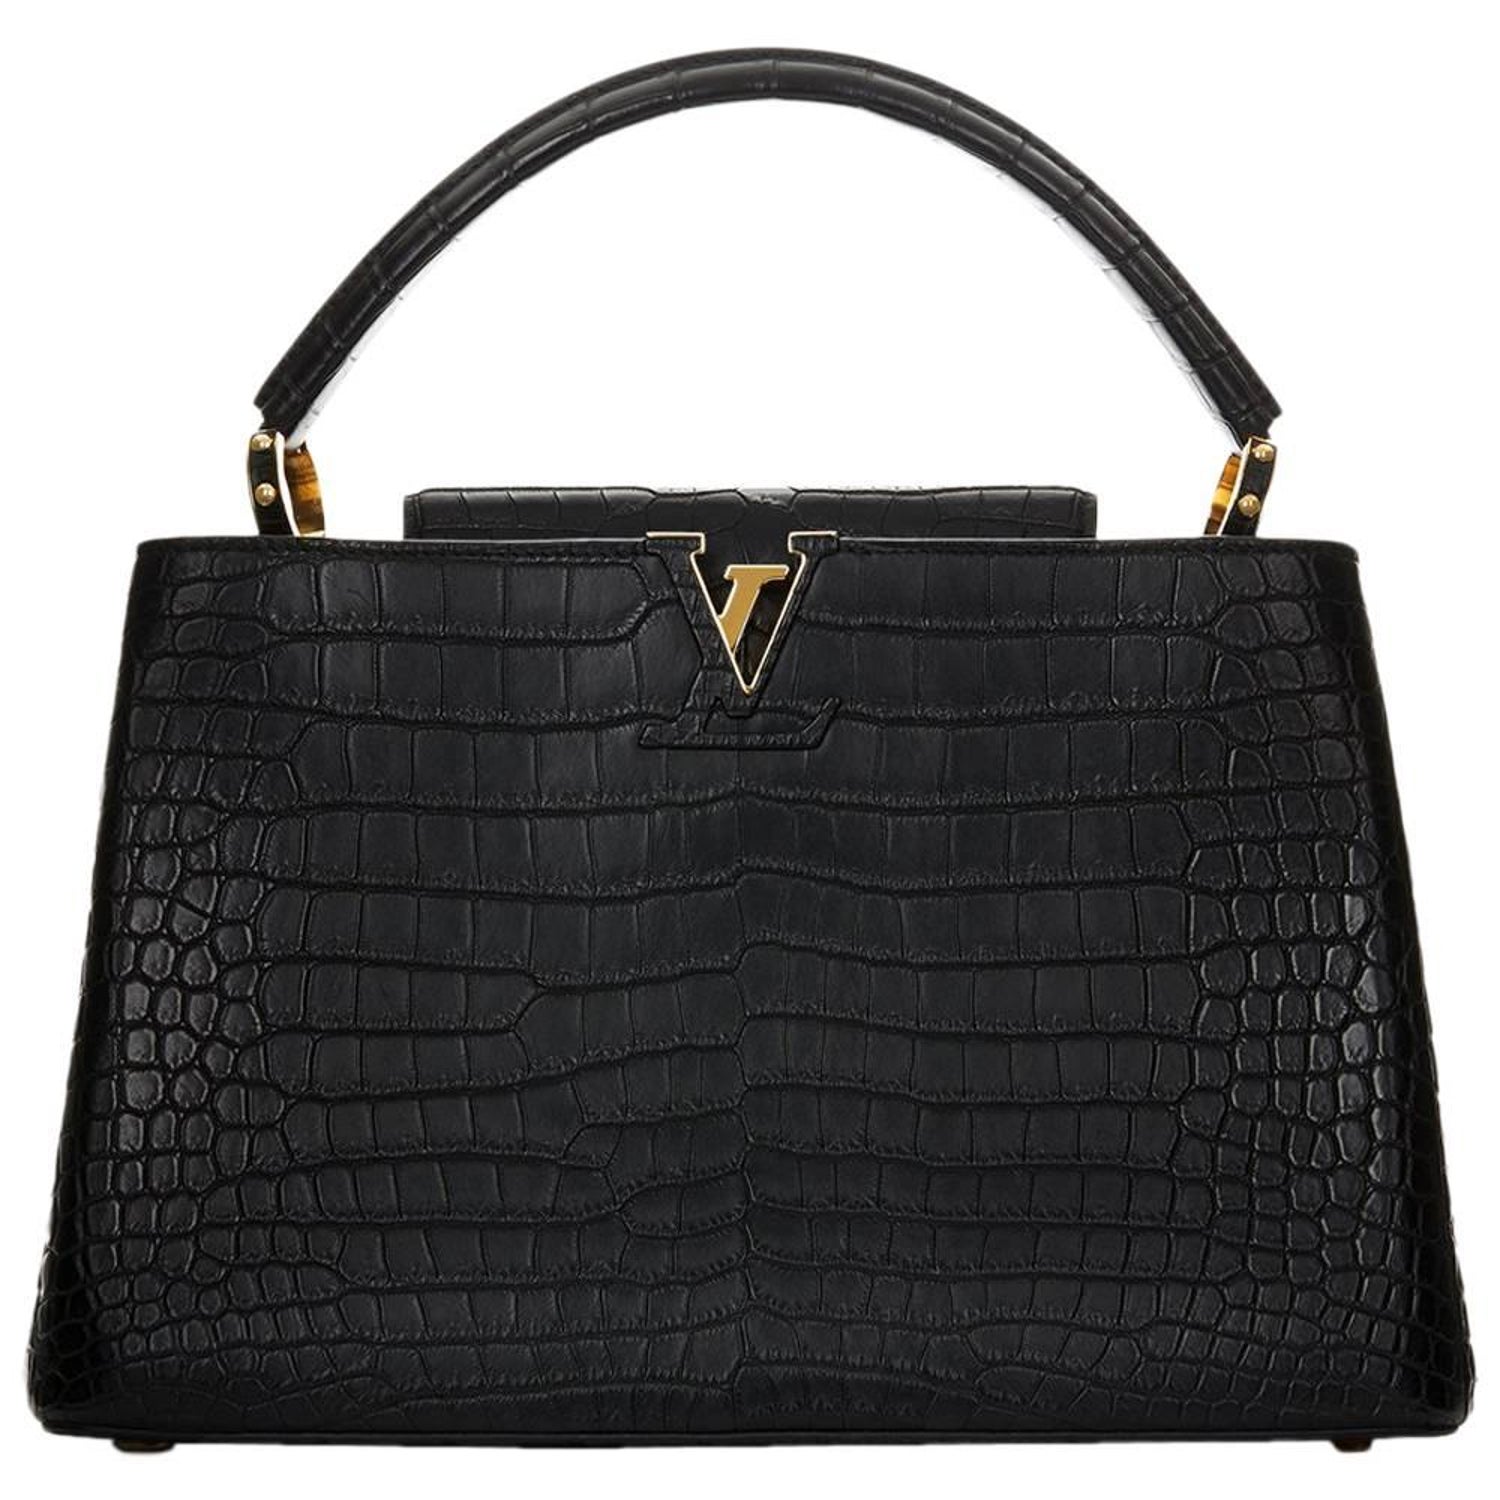 Look: Louis Vuitton's Capucines Handbags Inspired By the Little Mermaid